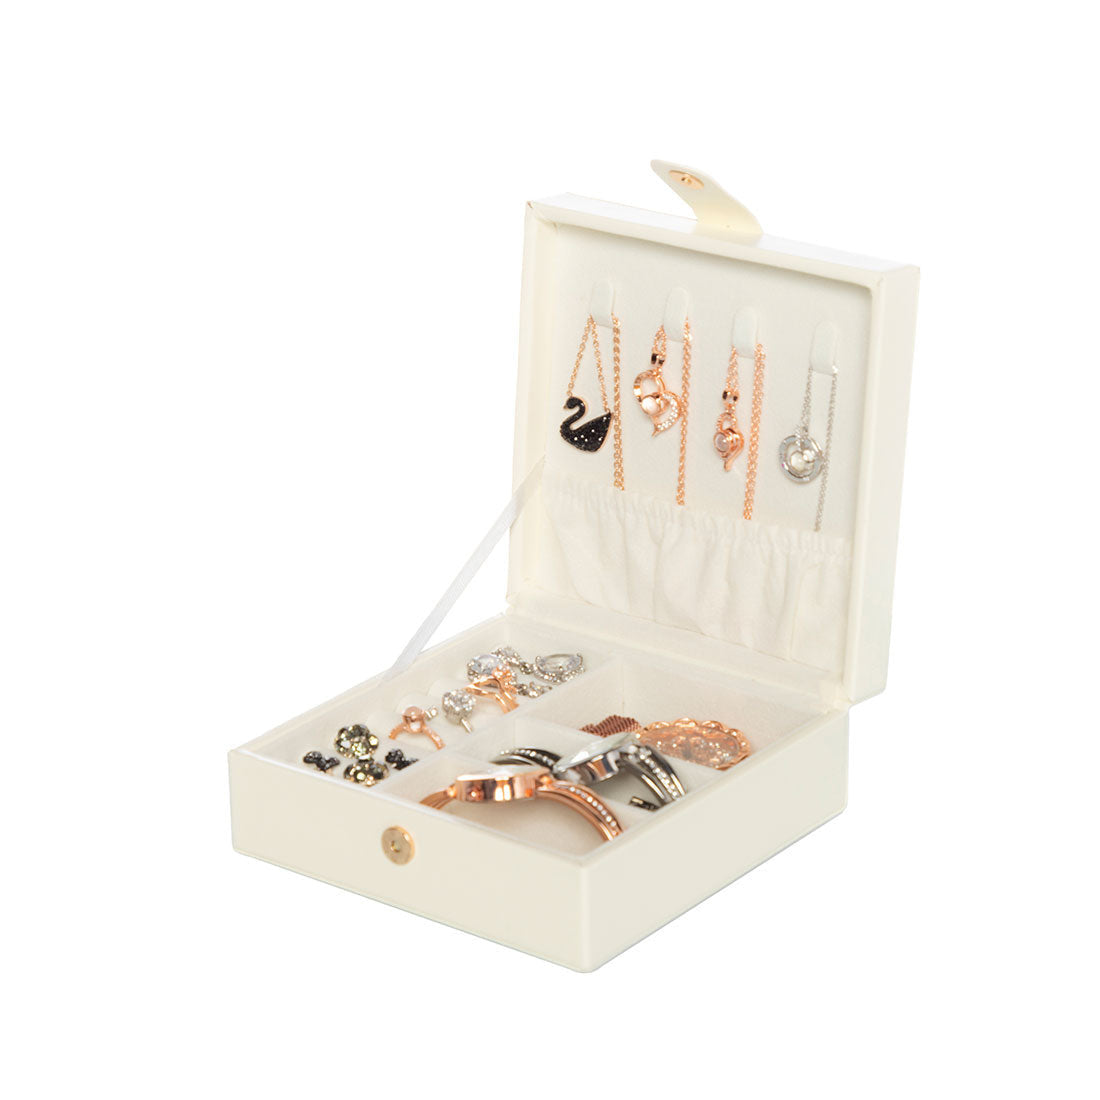 Accessories - Small Jewelry Box - COTRUNKAGE